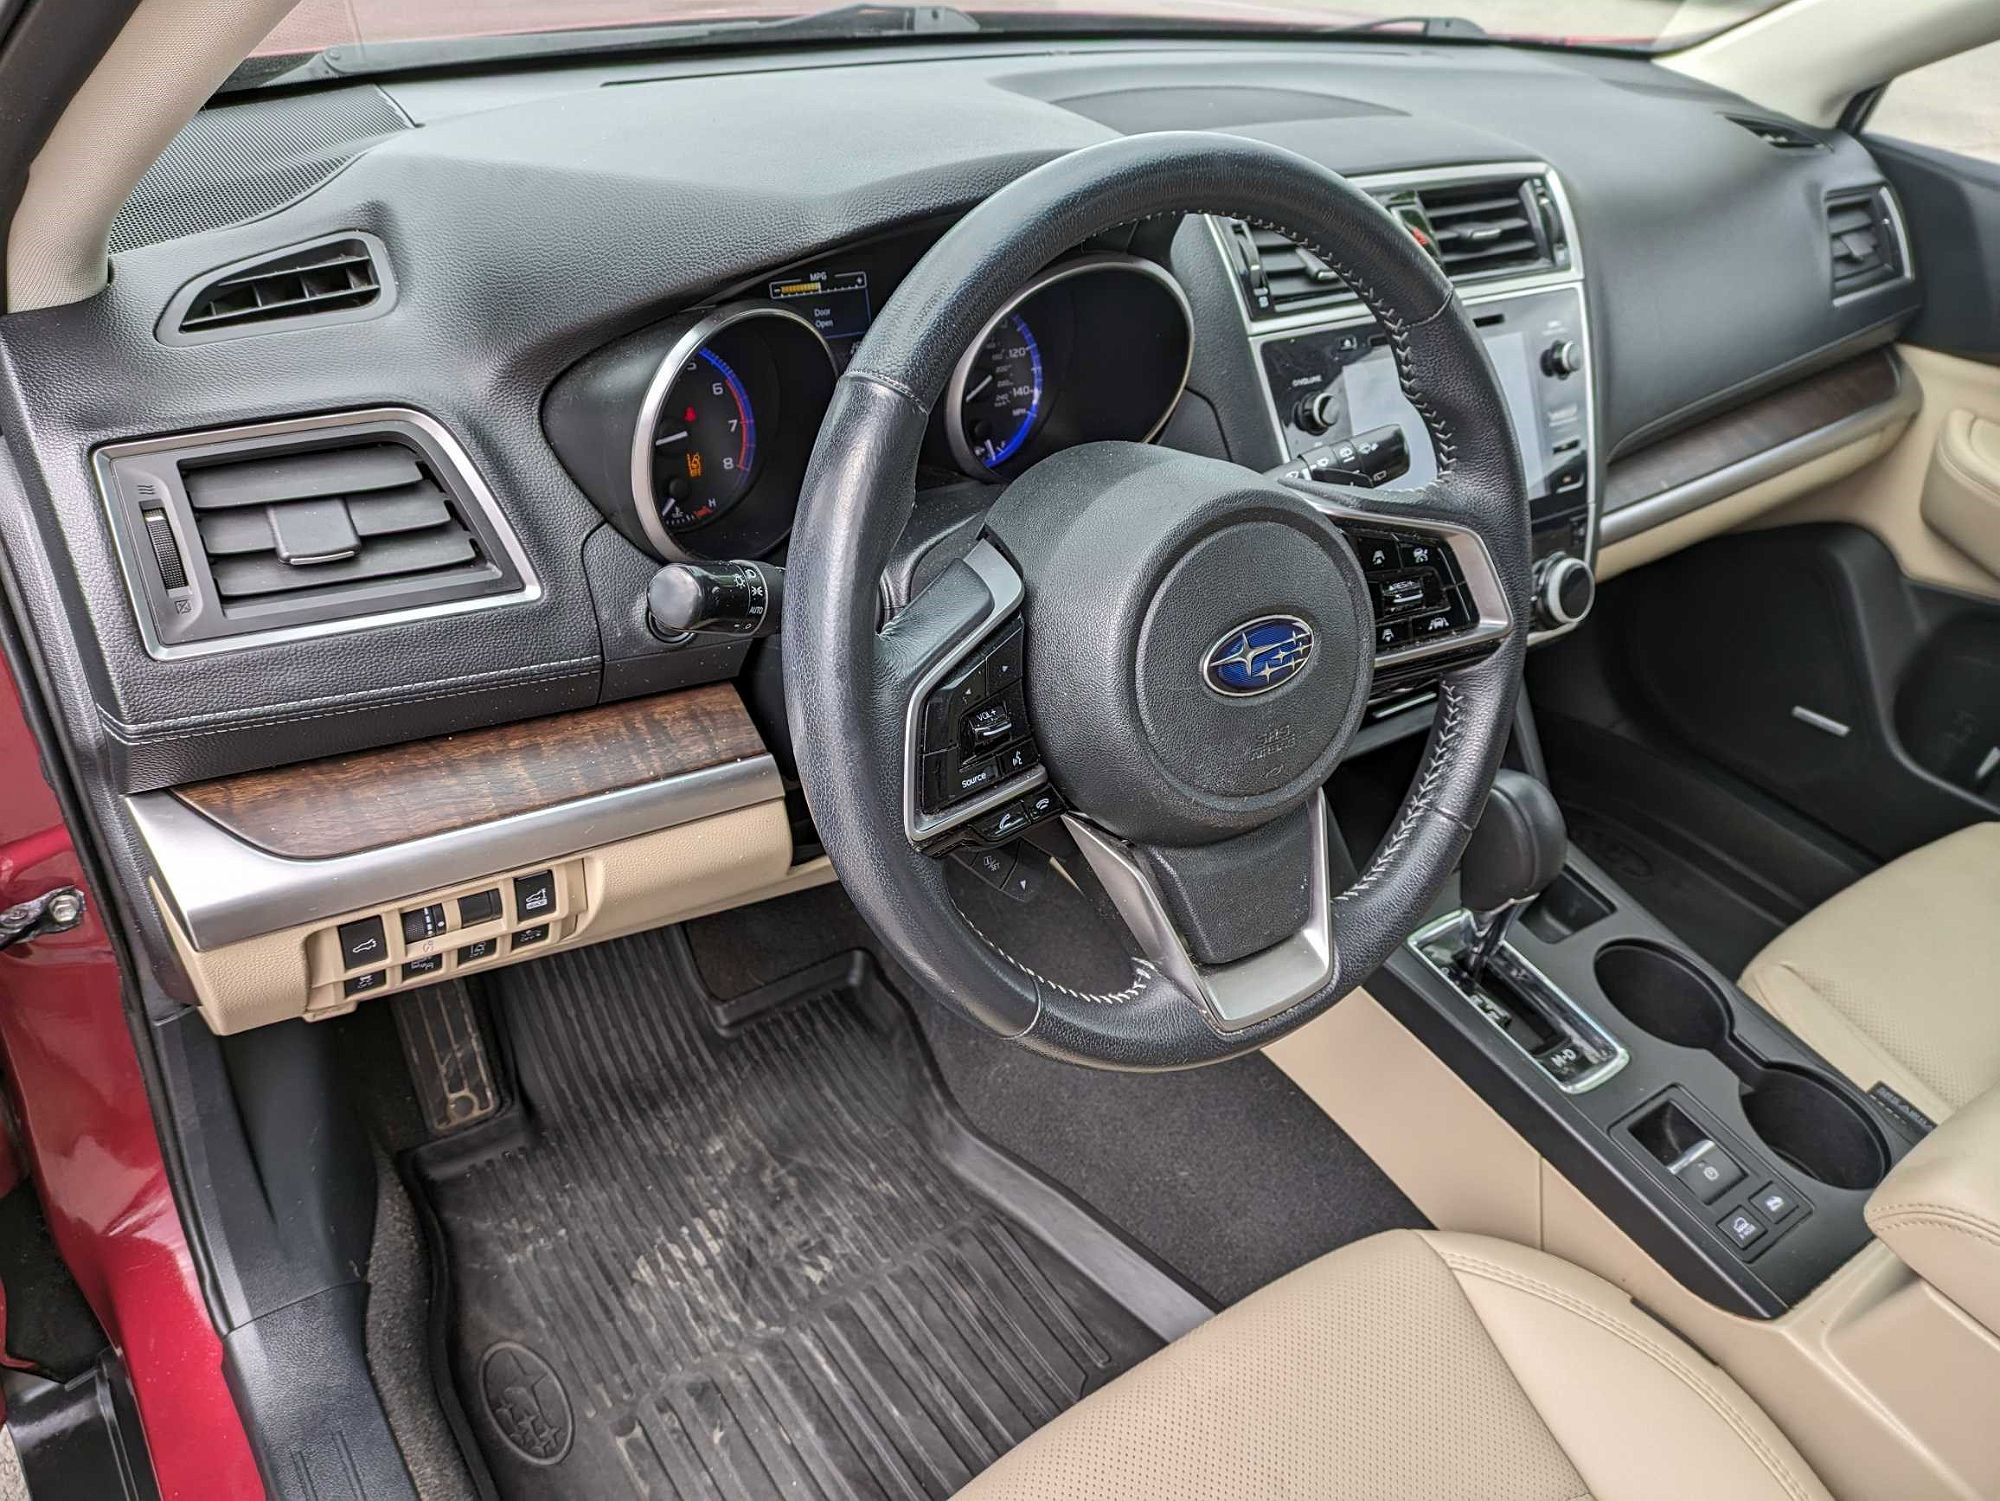 2018 Subaru Outback 2.5i Limited image 7